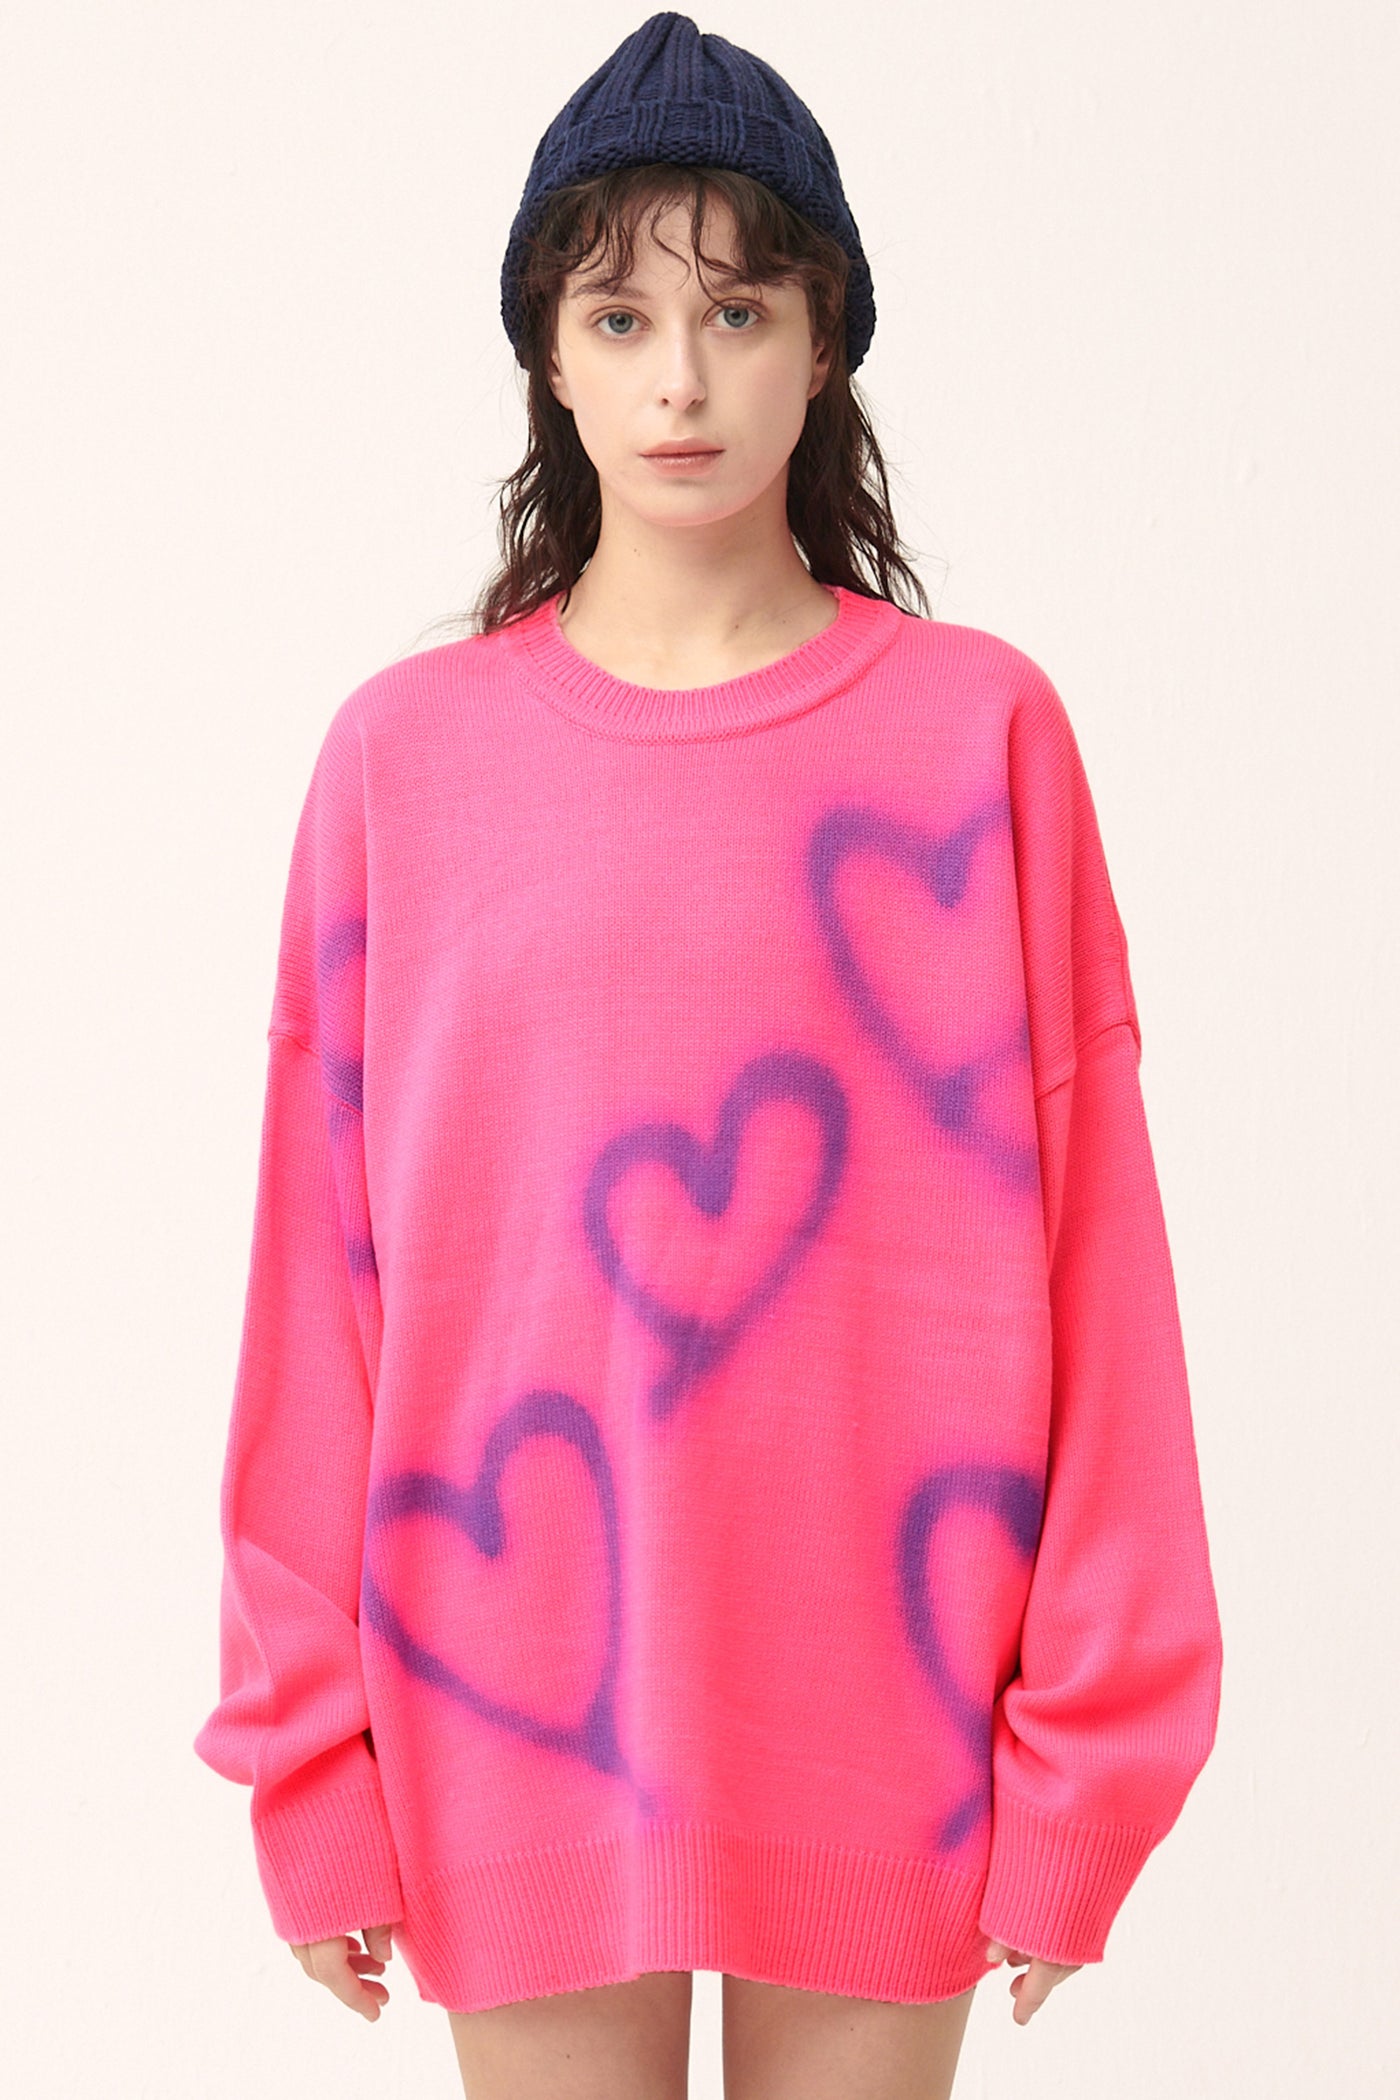 storets.com [NEW] Raya Heart Printed SweaterDress